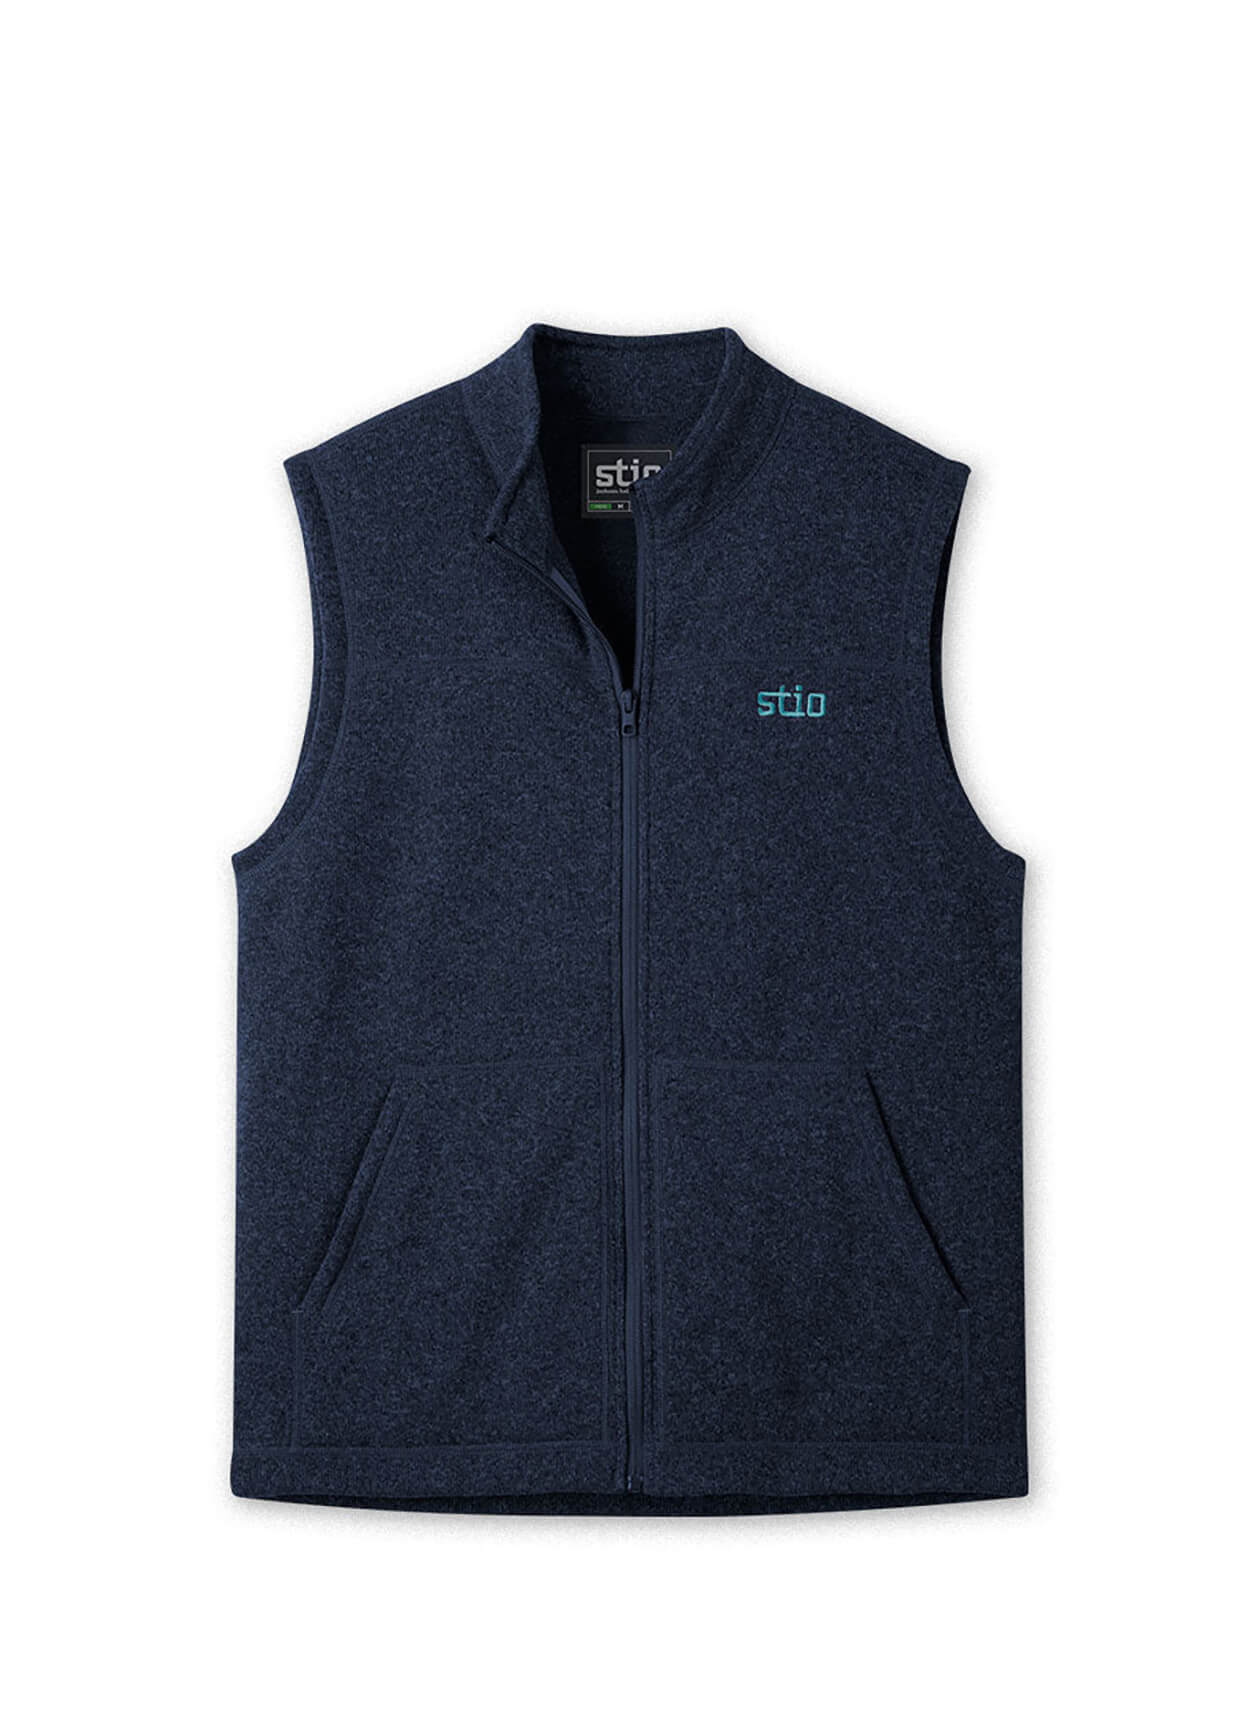 STIO Men's Wilcox Fleece Vest, Mountain Shadow